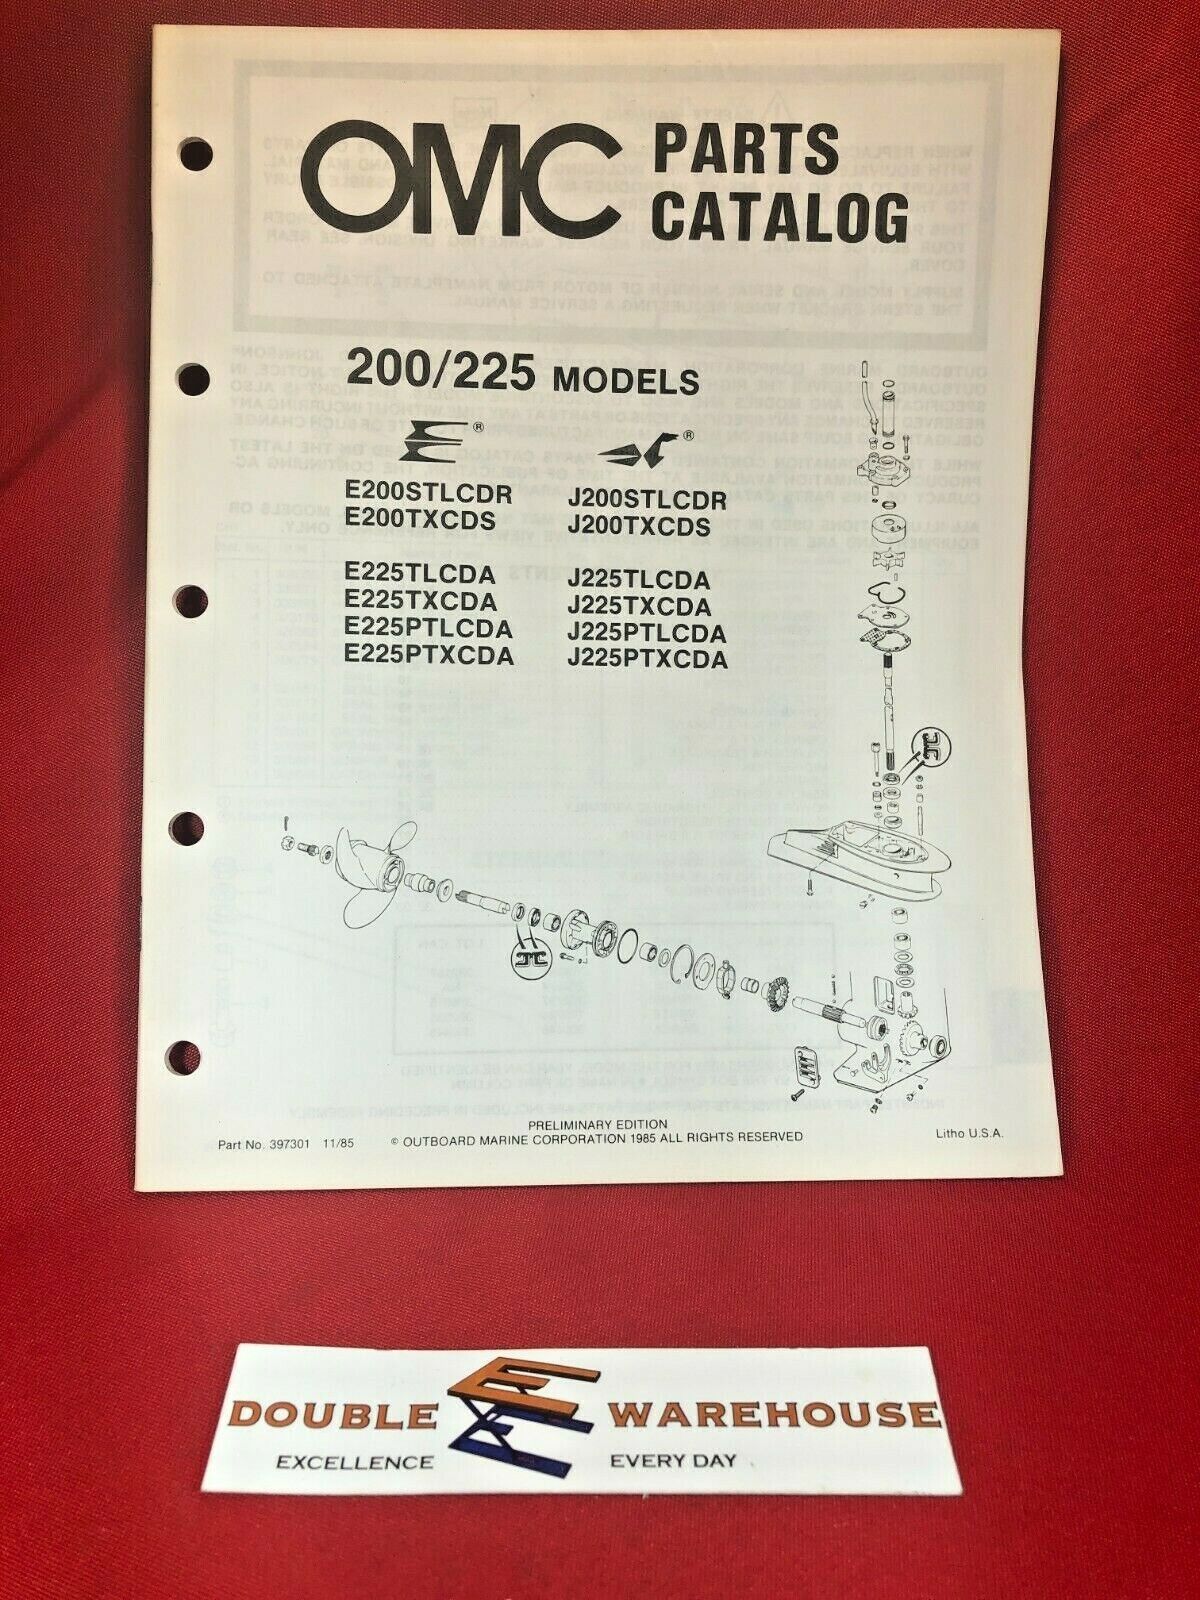 1985 OMC Parts Catalog Manual 397301 200/225 Models